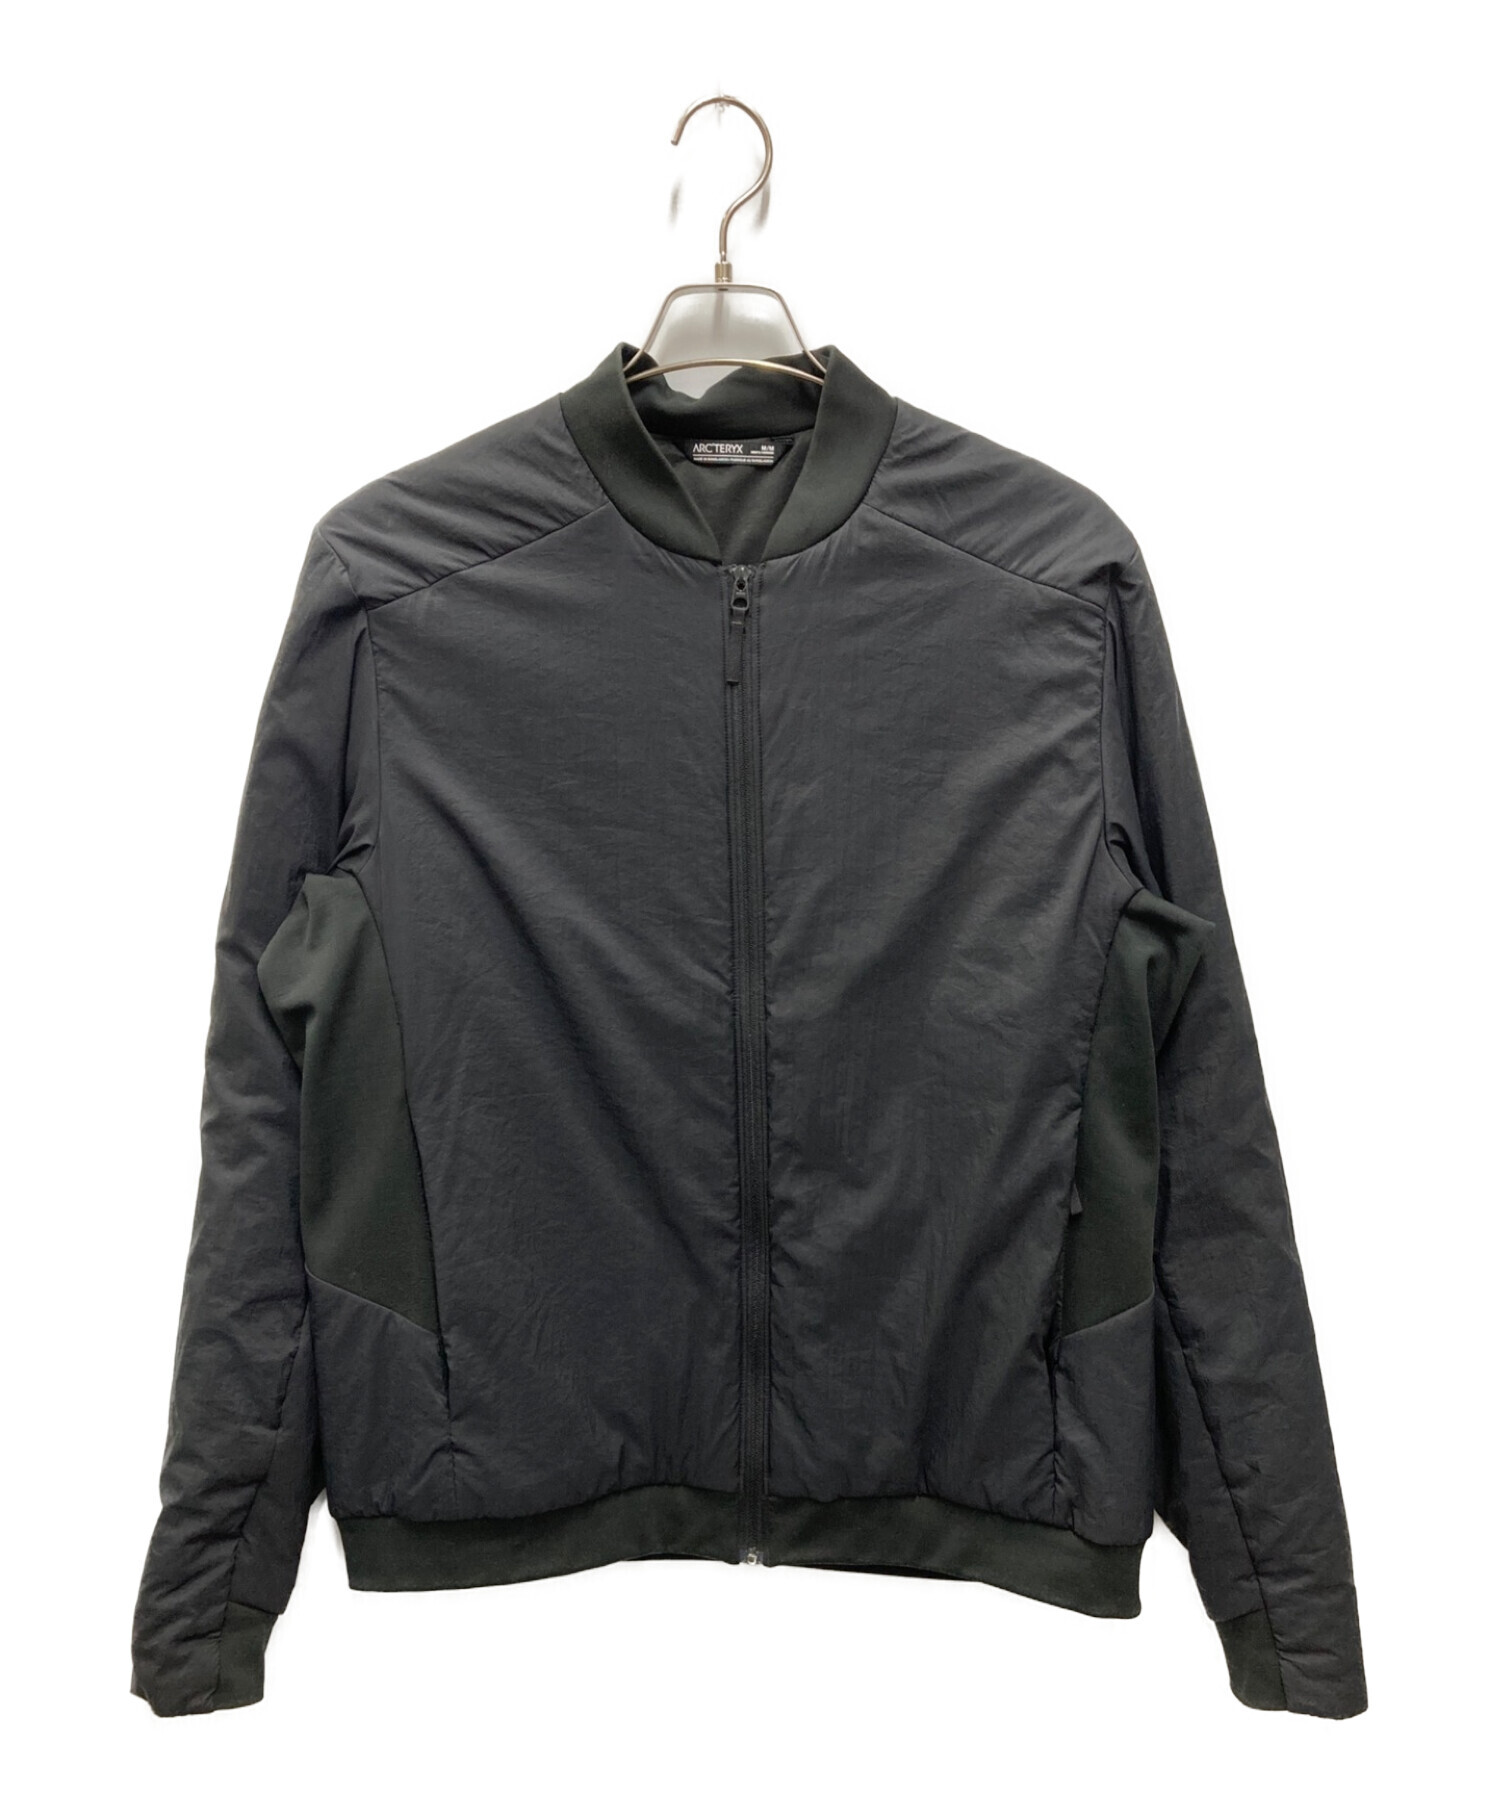 ARC'TERYX (アークテリクス) セトンジャケット ブラック サイズ:M